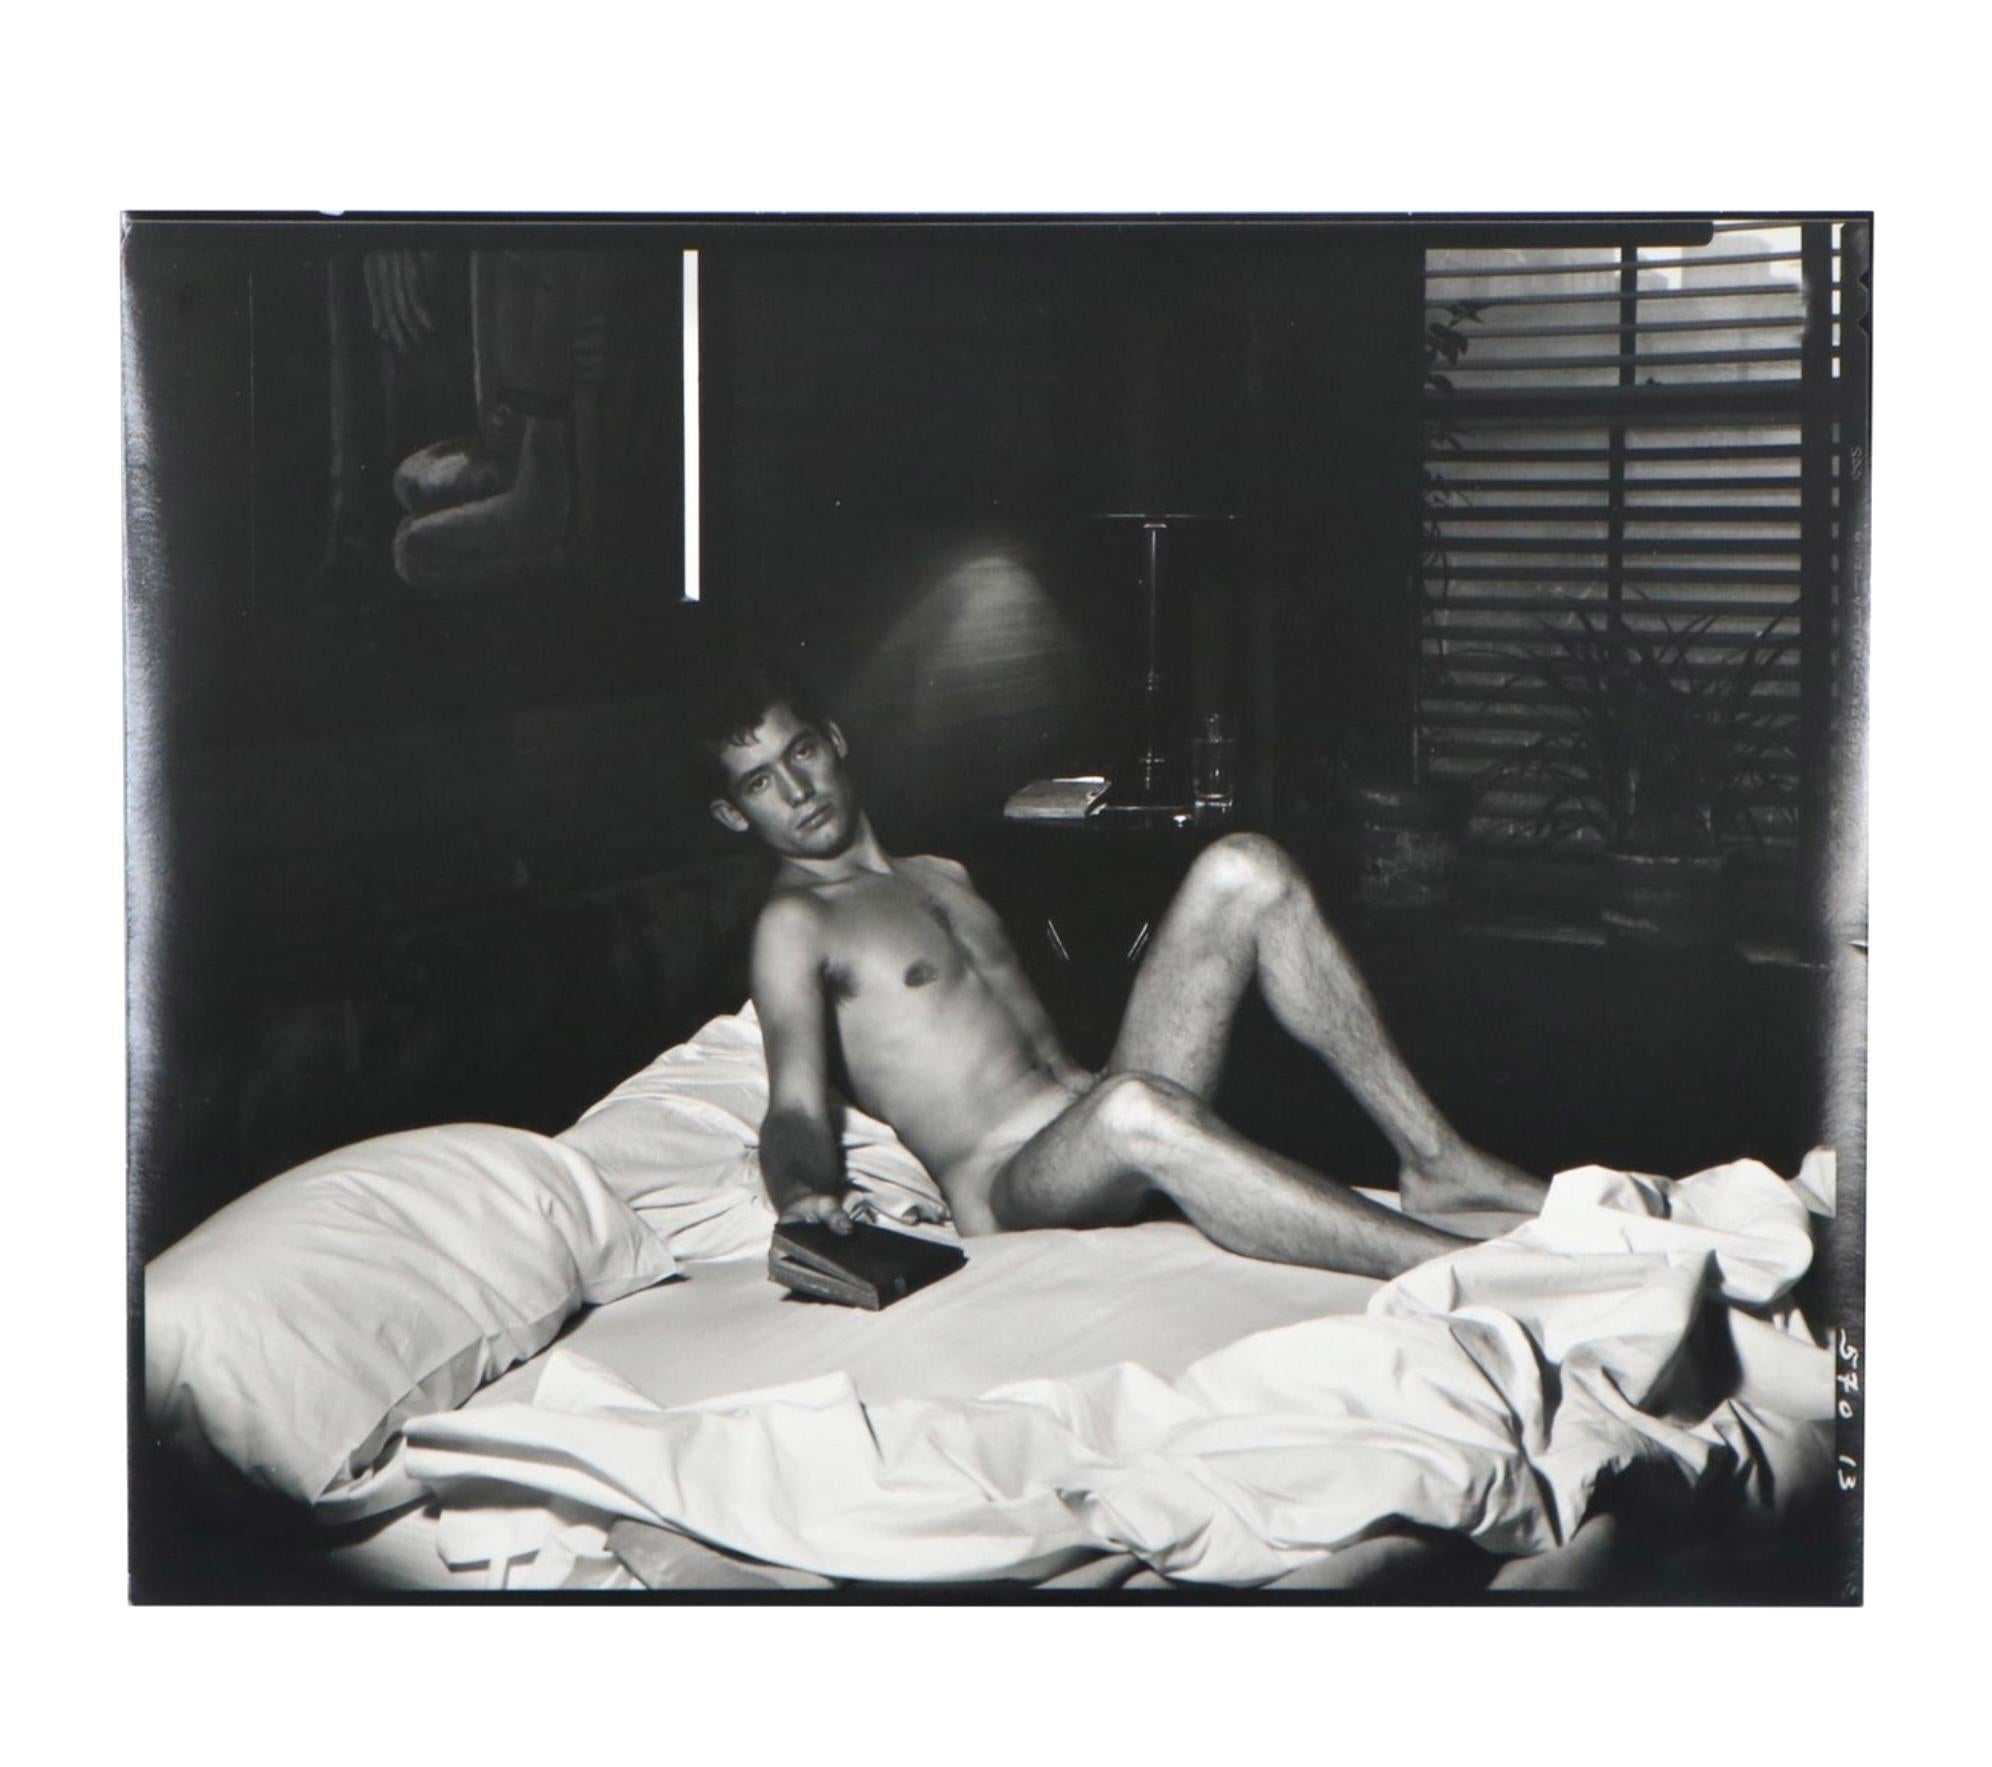 George Platt Lynes, Charles Roman on Artist’s Bed, Silver Gelatin Print, 1955

George Platt Lynes (American 1907-1955) 
Untitled (reclining nude), printed 1955 
Model credit: Charles Romans

George Platt Lynes was a celebrated fashion